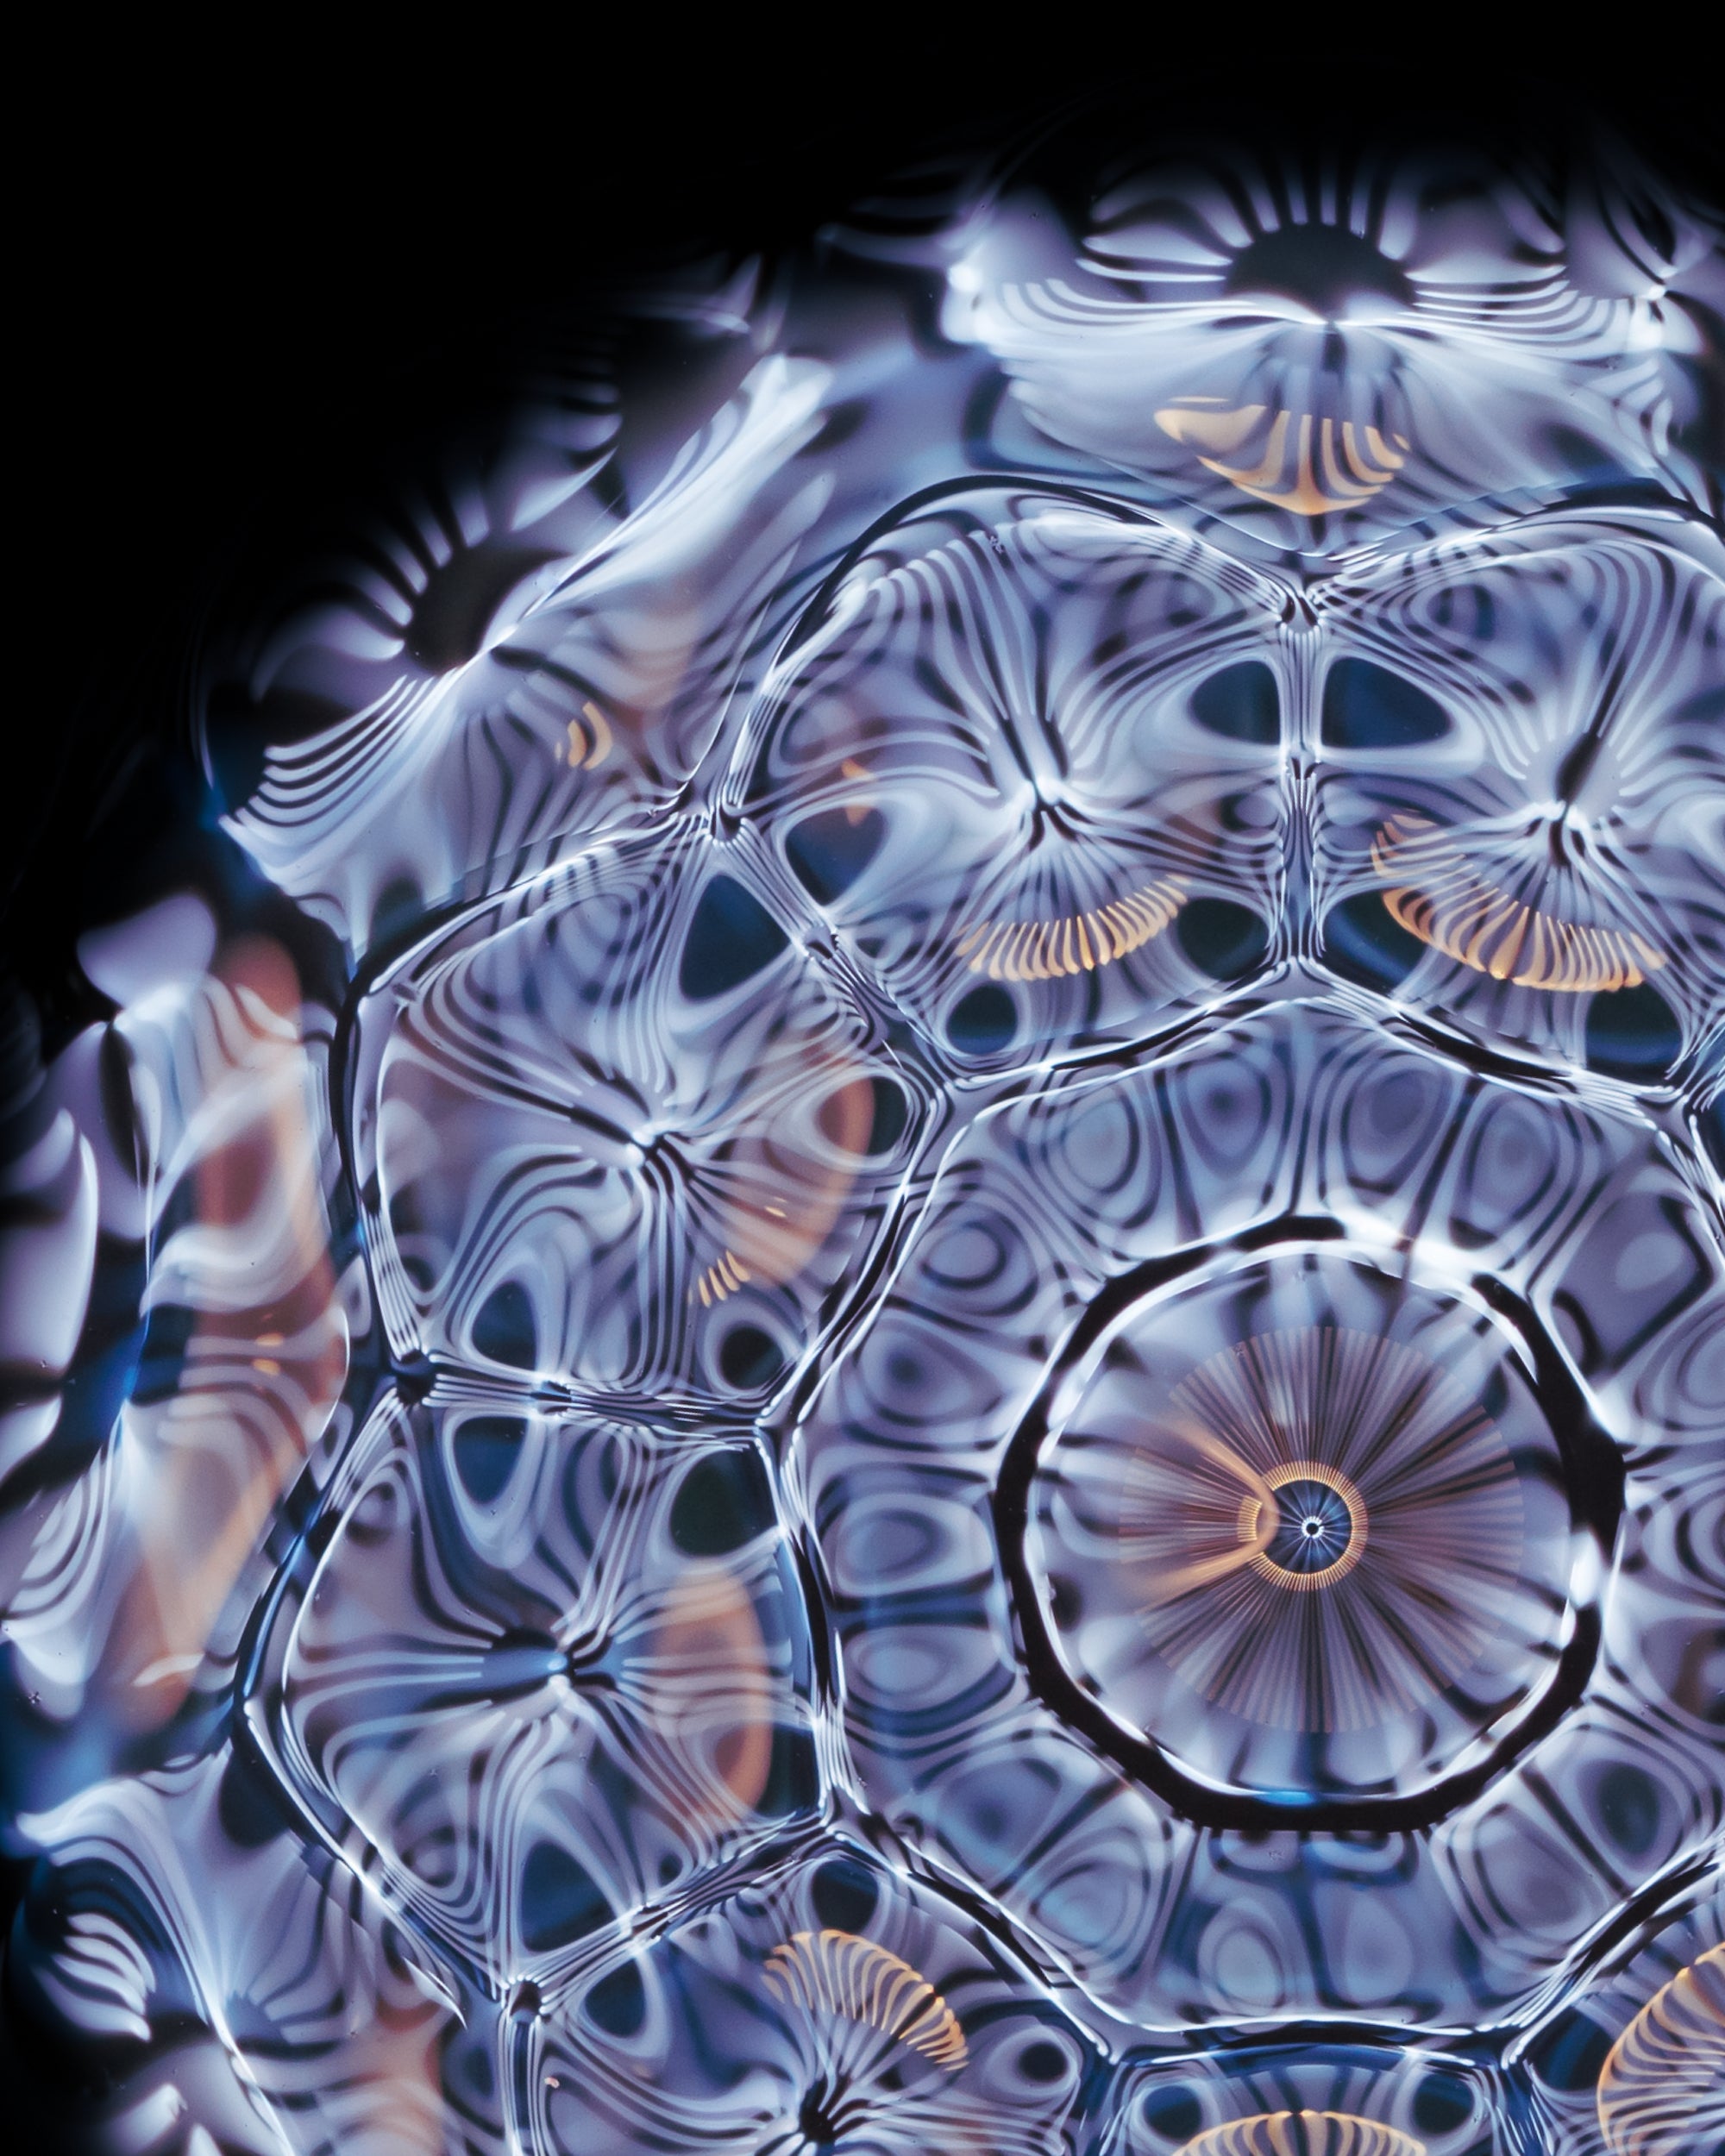 cymatics photo print 43.6Hz (Note F) - Journey of Curiosity